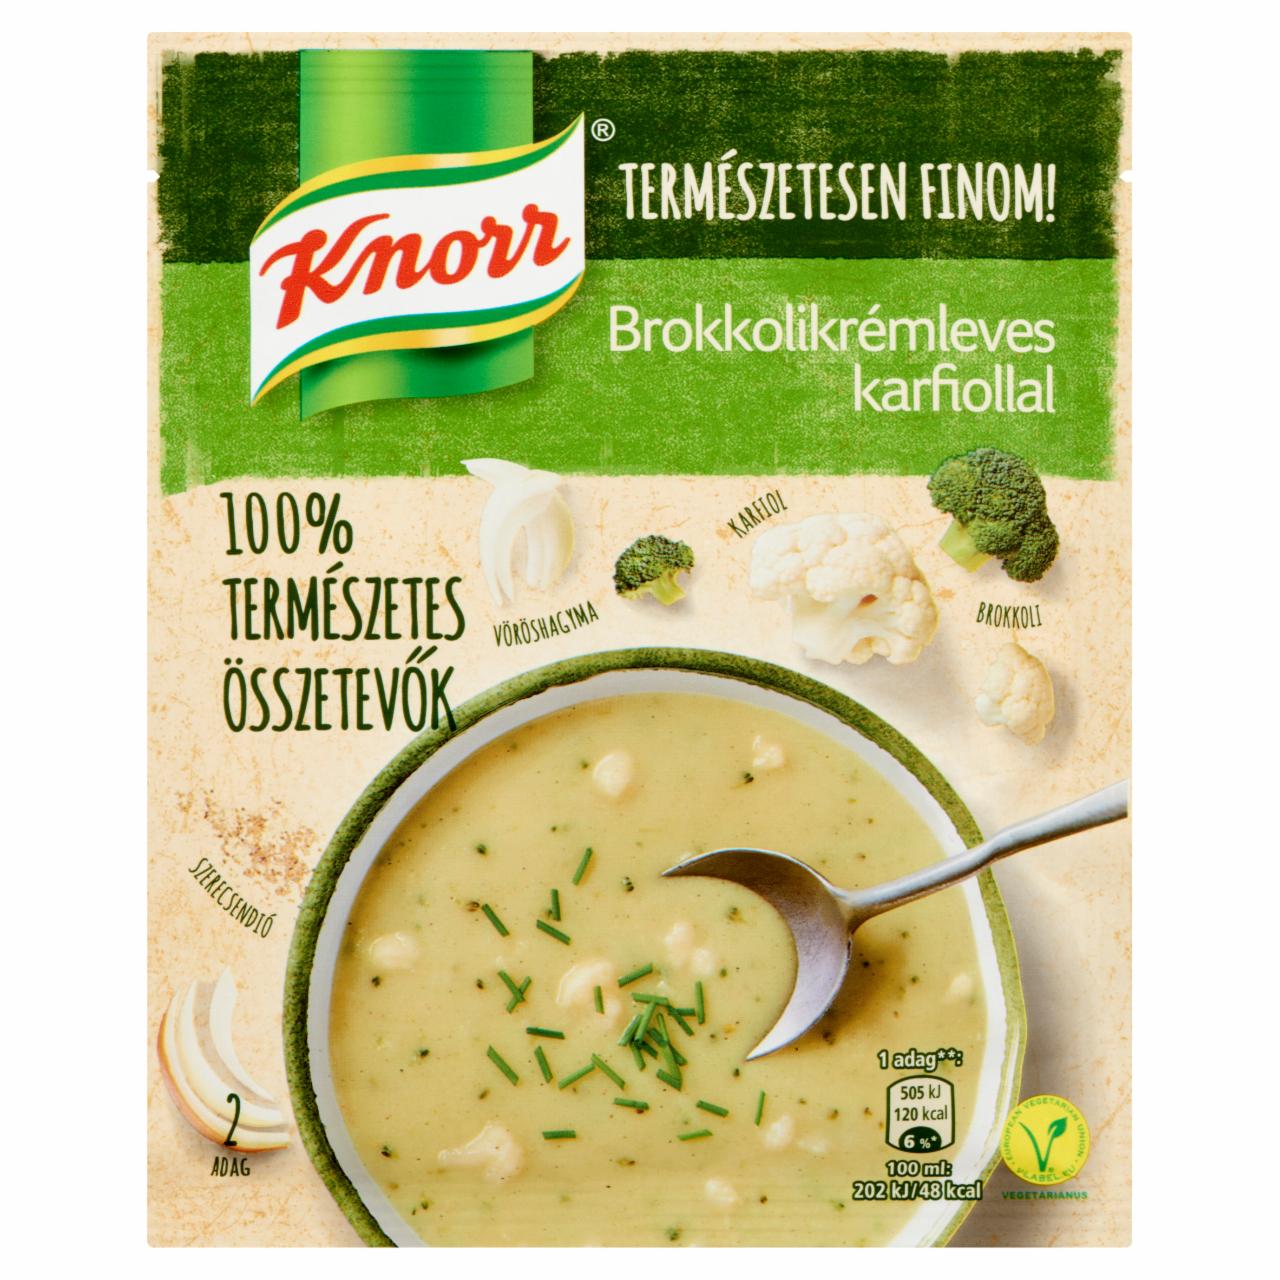 Képek - Knorr brokkolikrémleves karfiollal 52 g